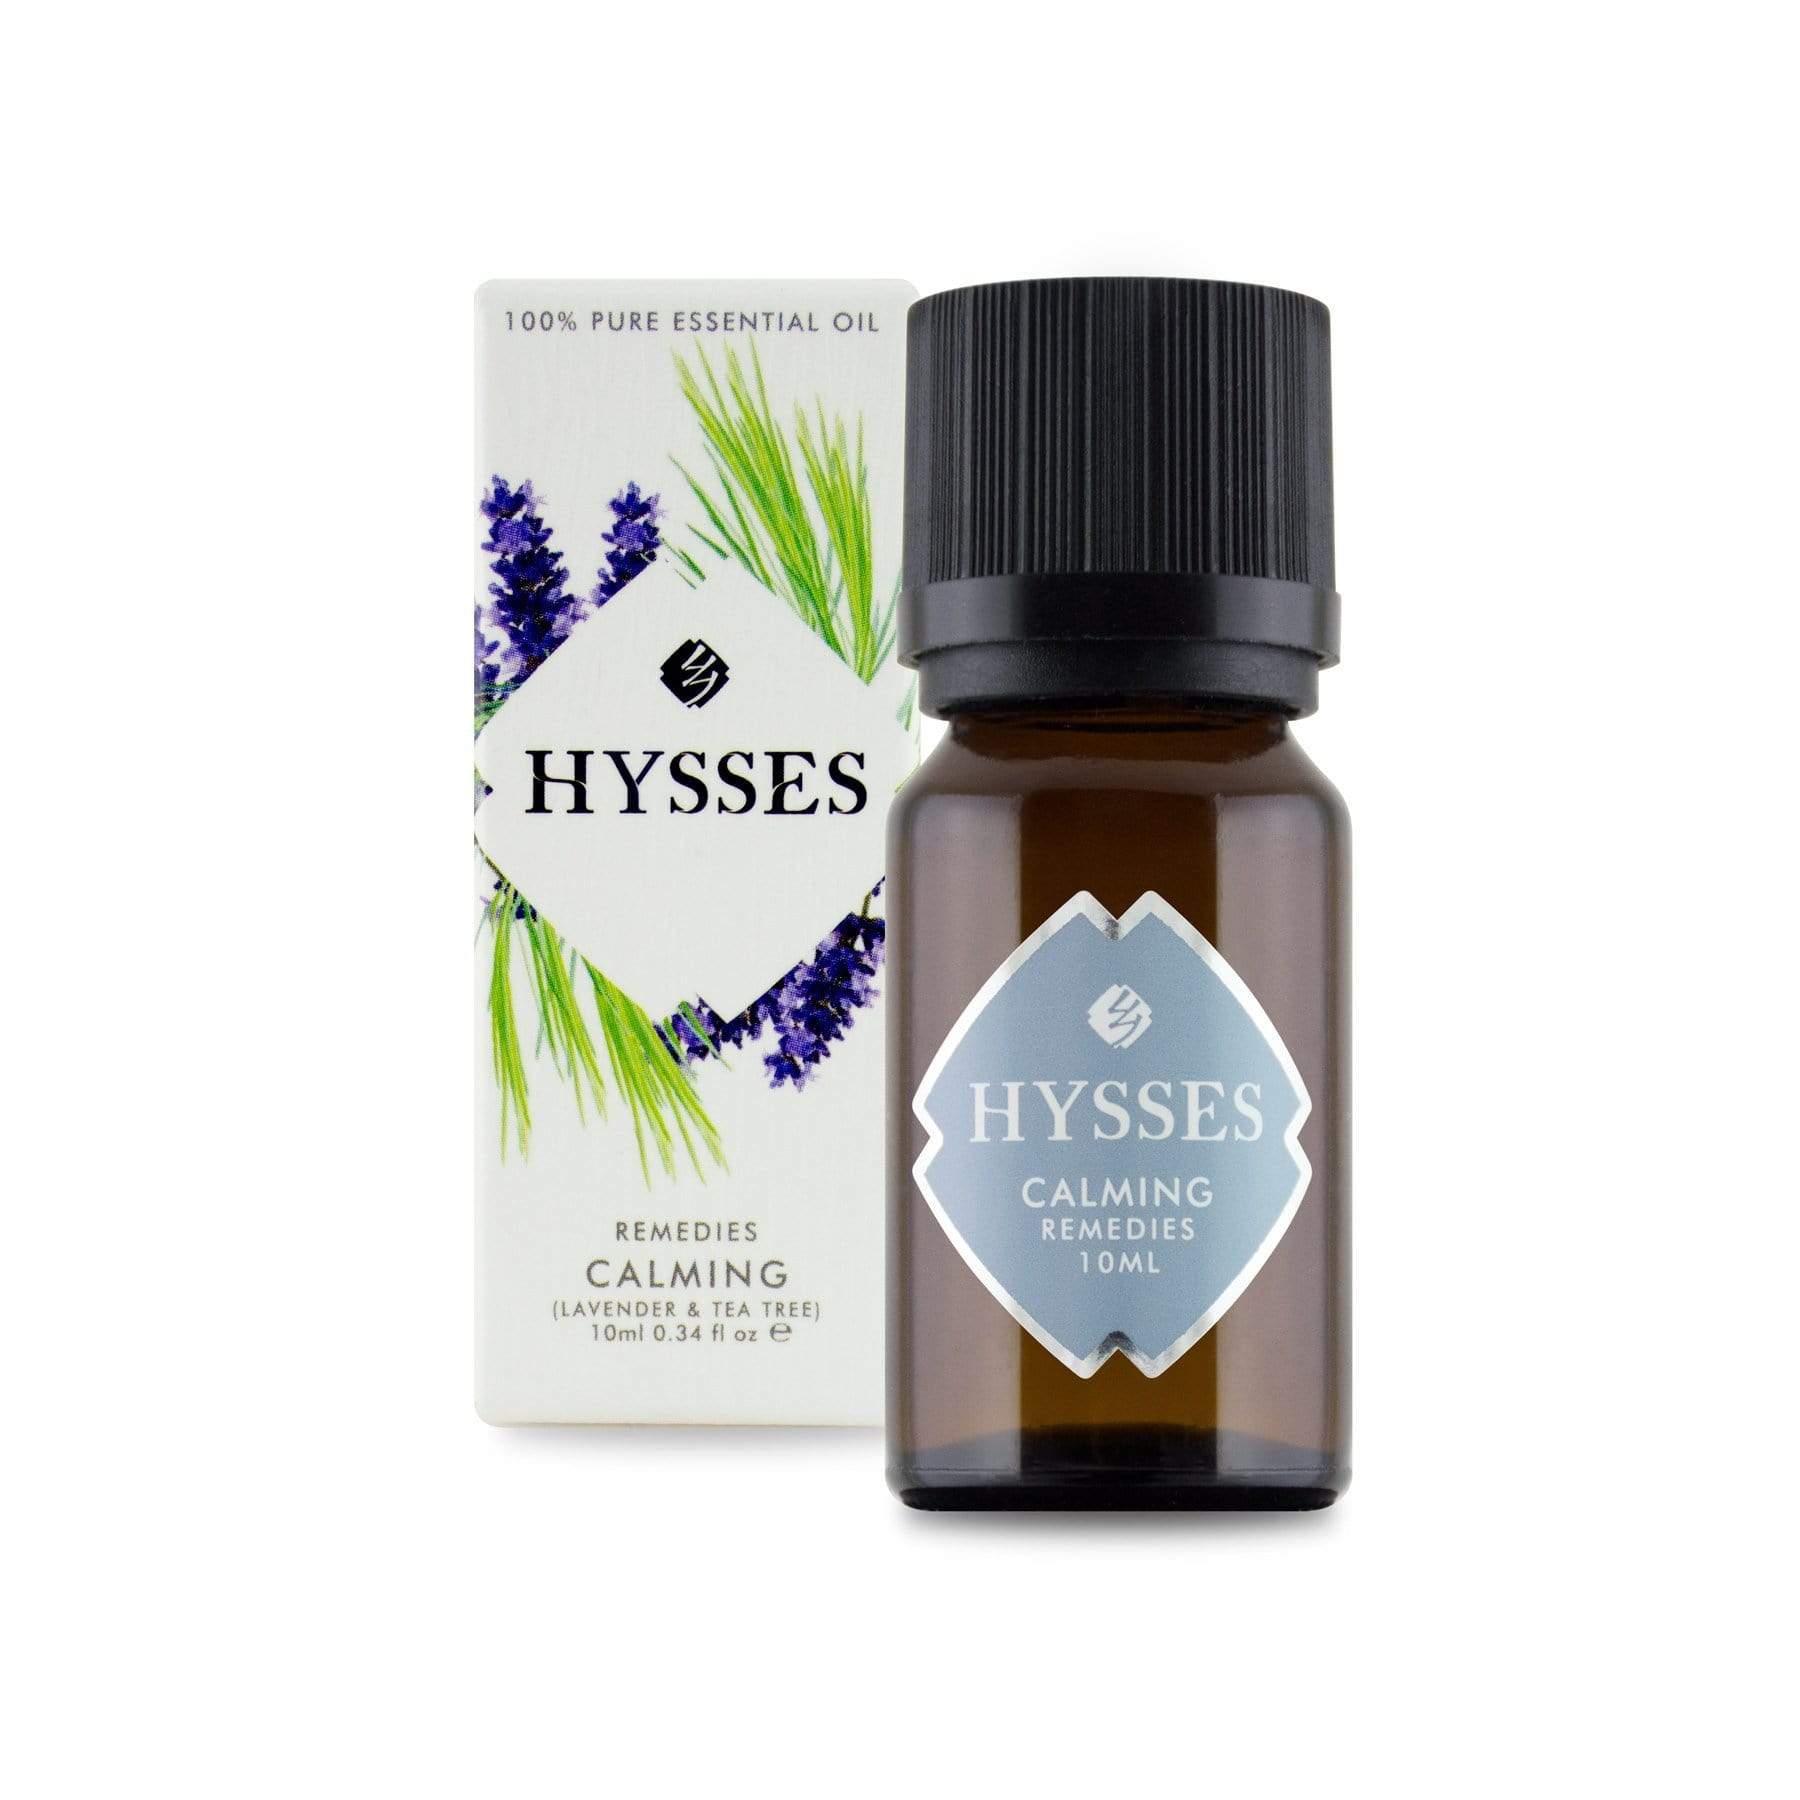 Hysses Essential Oil 10ml Remedies, Calming 10ml